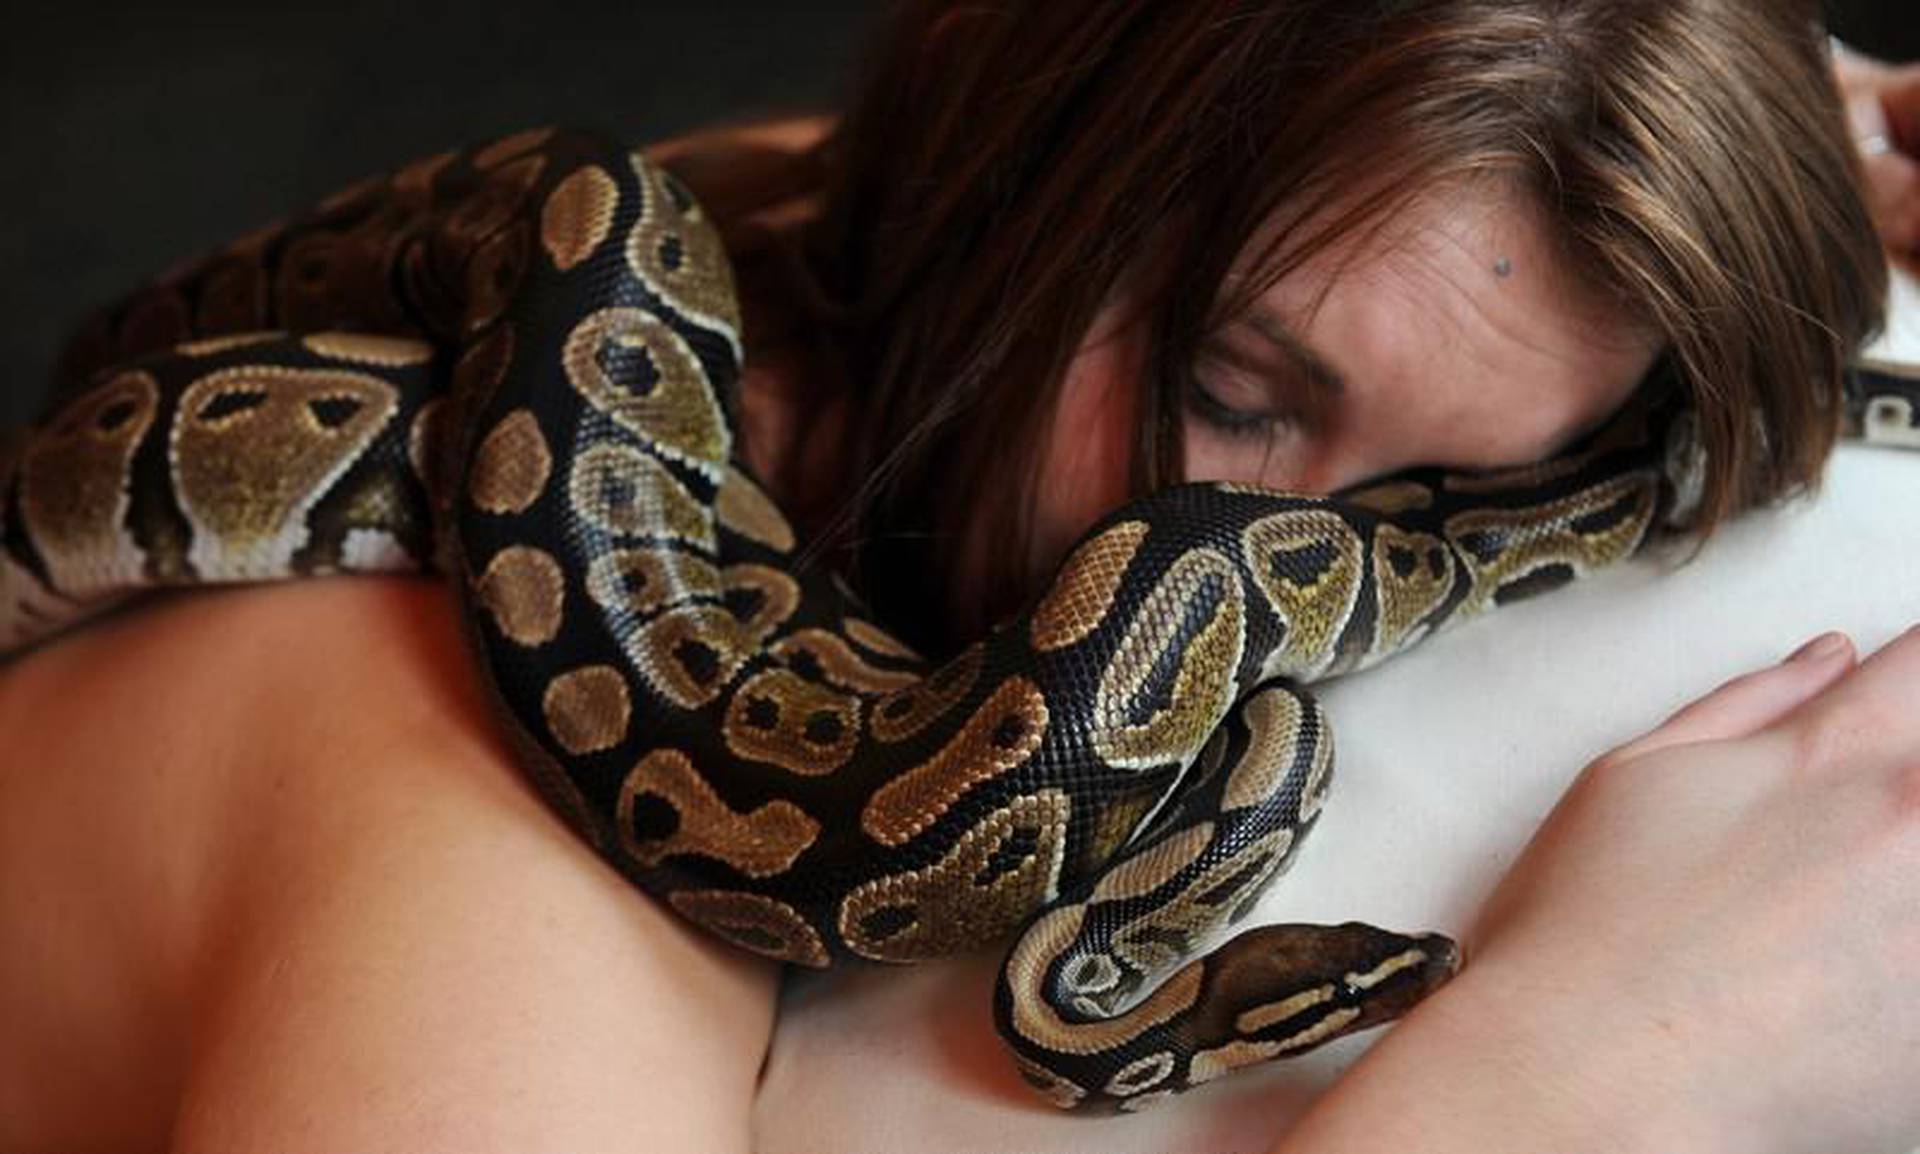 She is snake. Анаконда питон и женщина. Фотосессия со змеями. Девушка змея. Девушка с удавом.